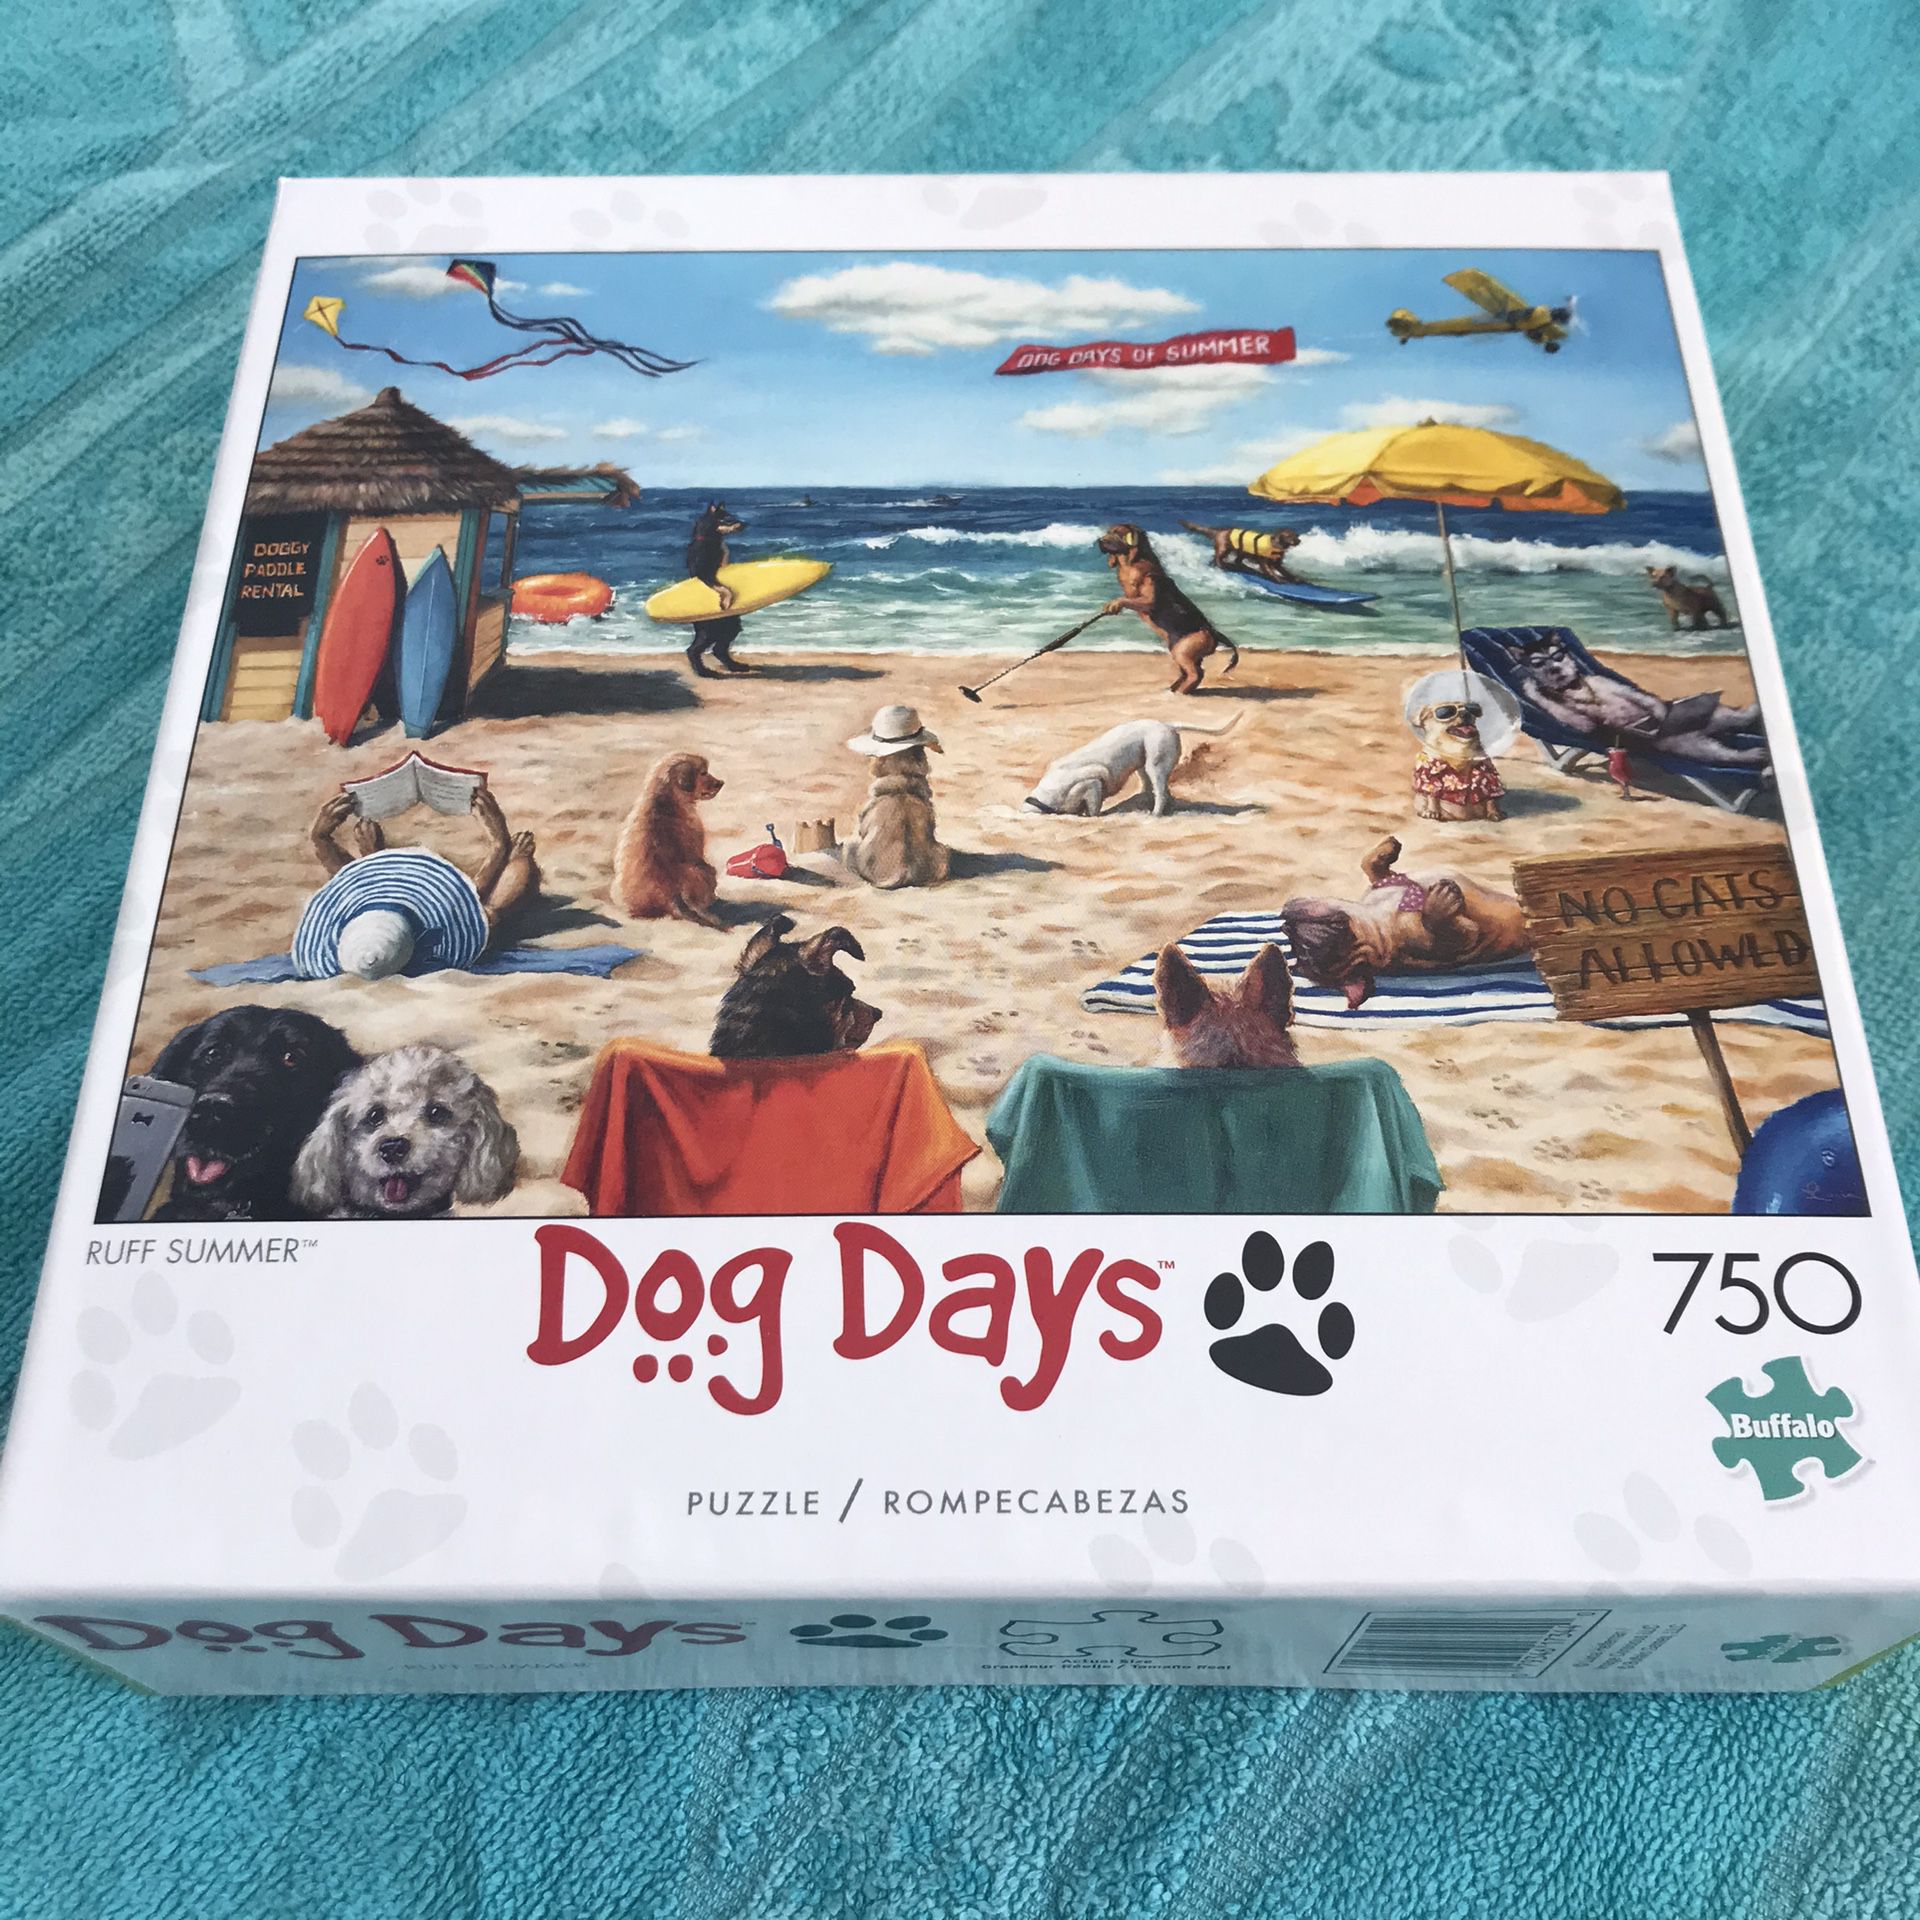 NEW!!! 750 Piece Puzzle DOG DAYS “RUFF SUMMER“